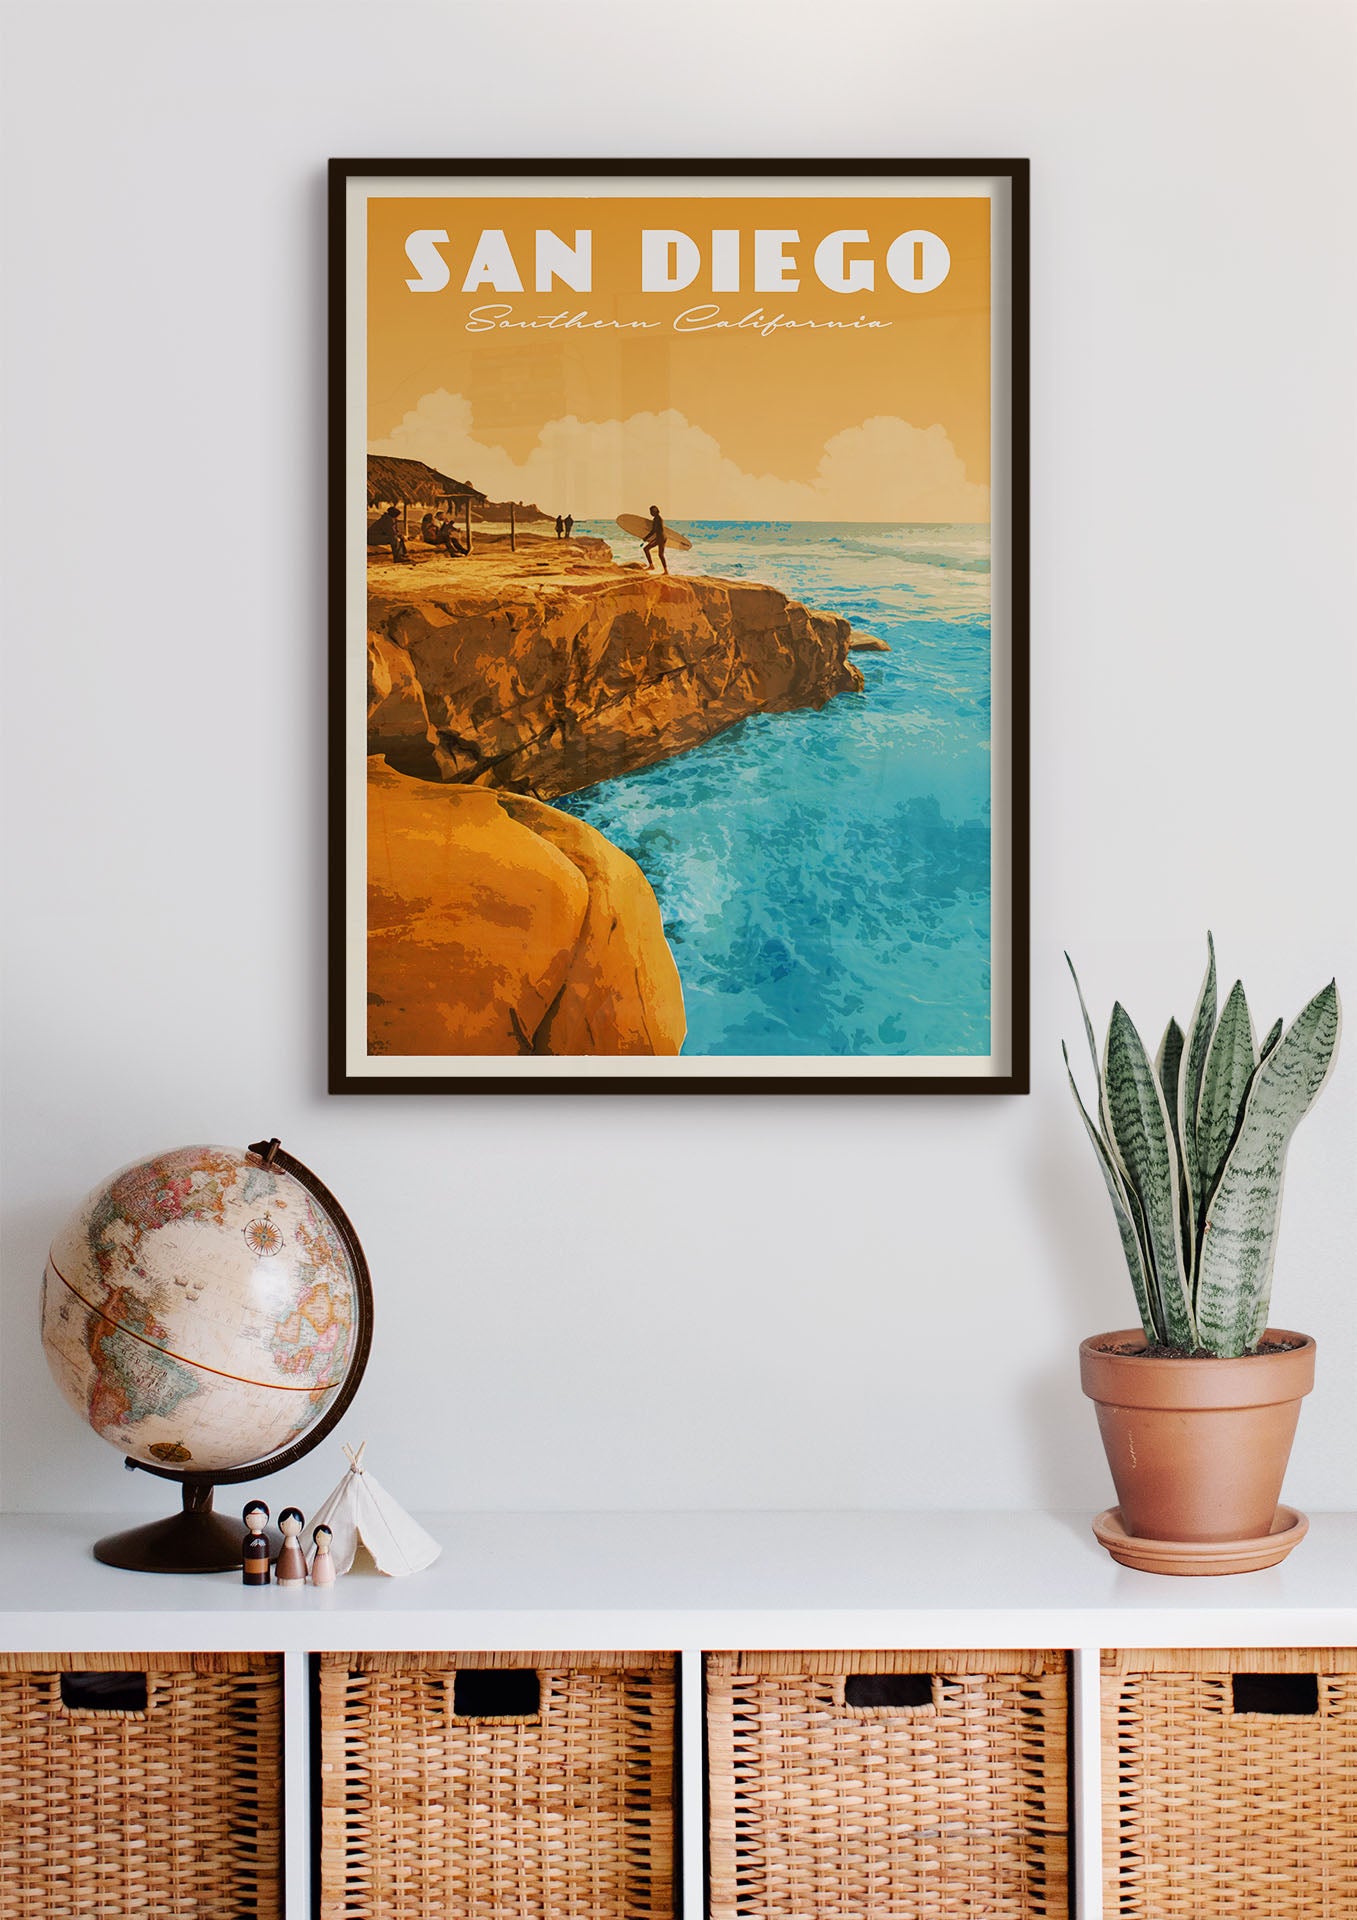 San Diego, California Vintage Wall Art Travel Poster | Vintaprints